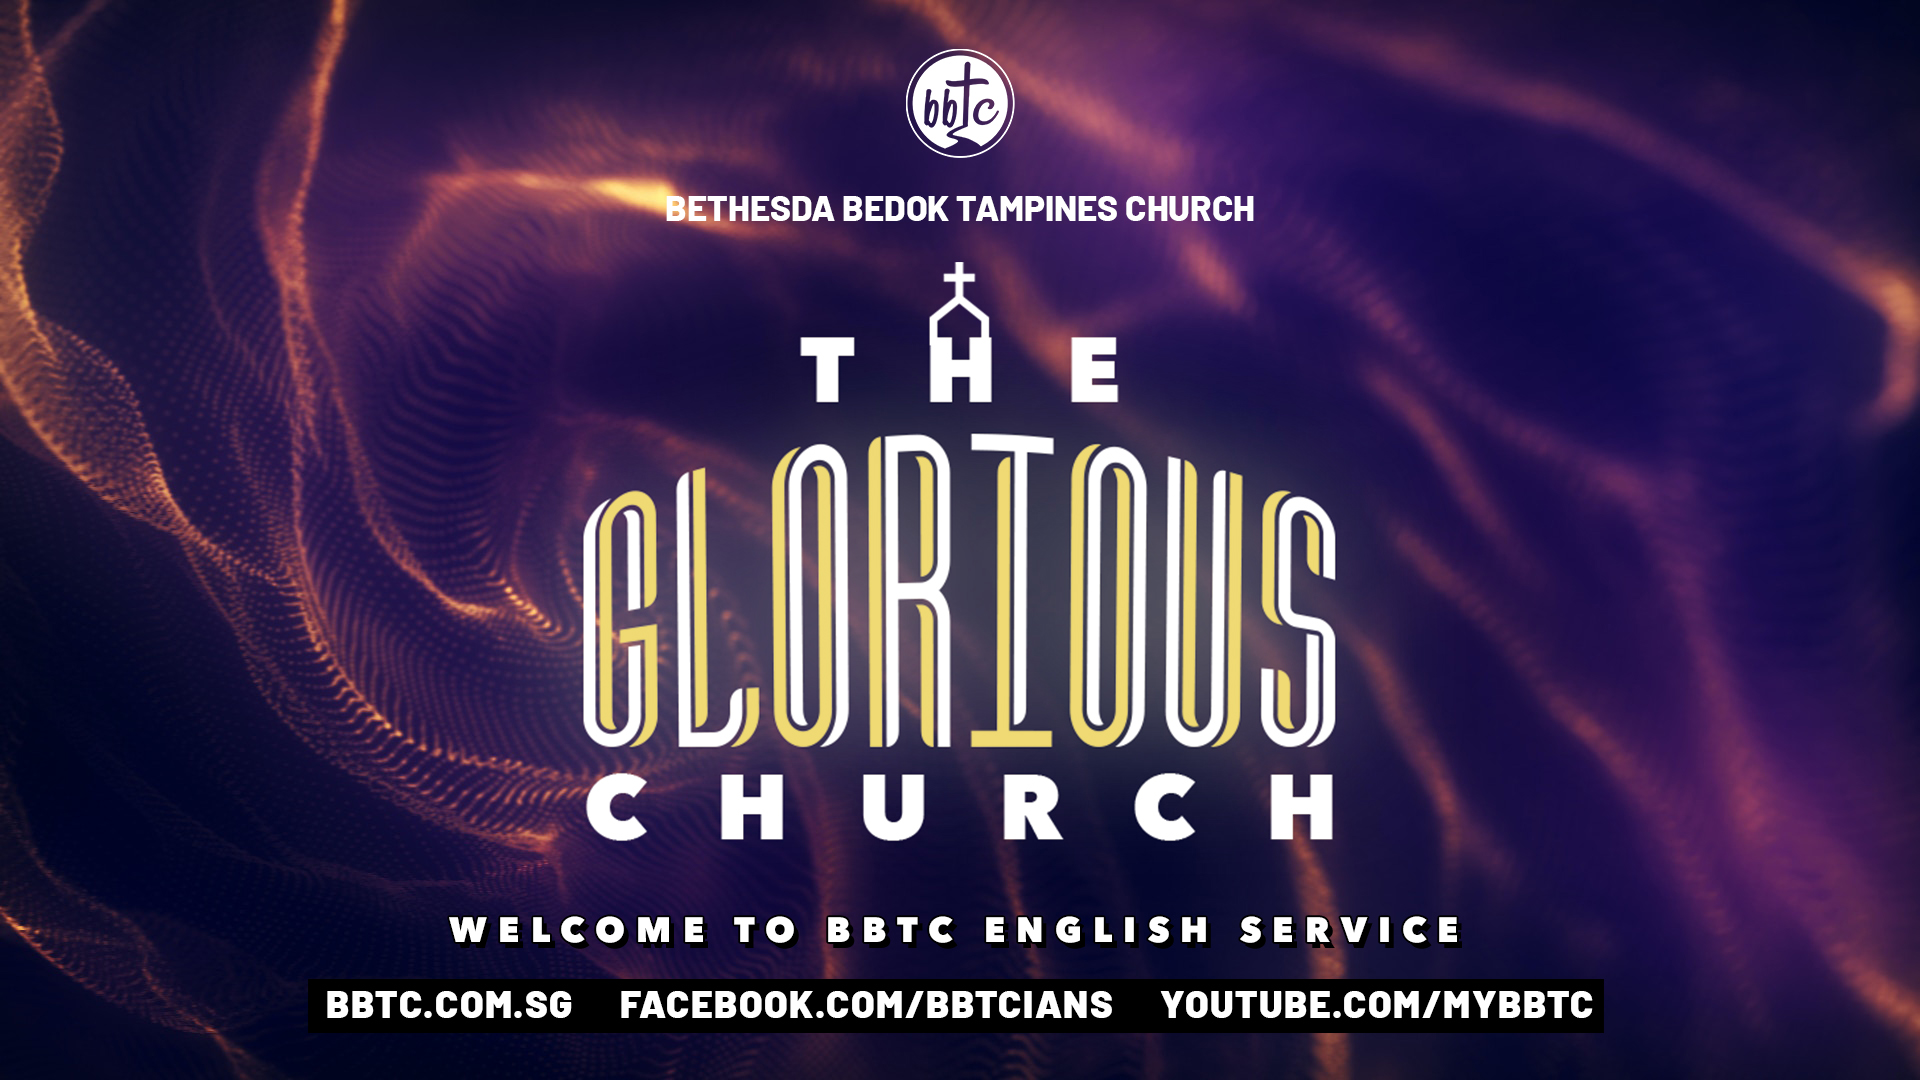 THE GLORIOUS CHURCH